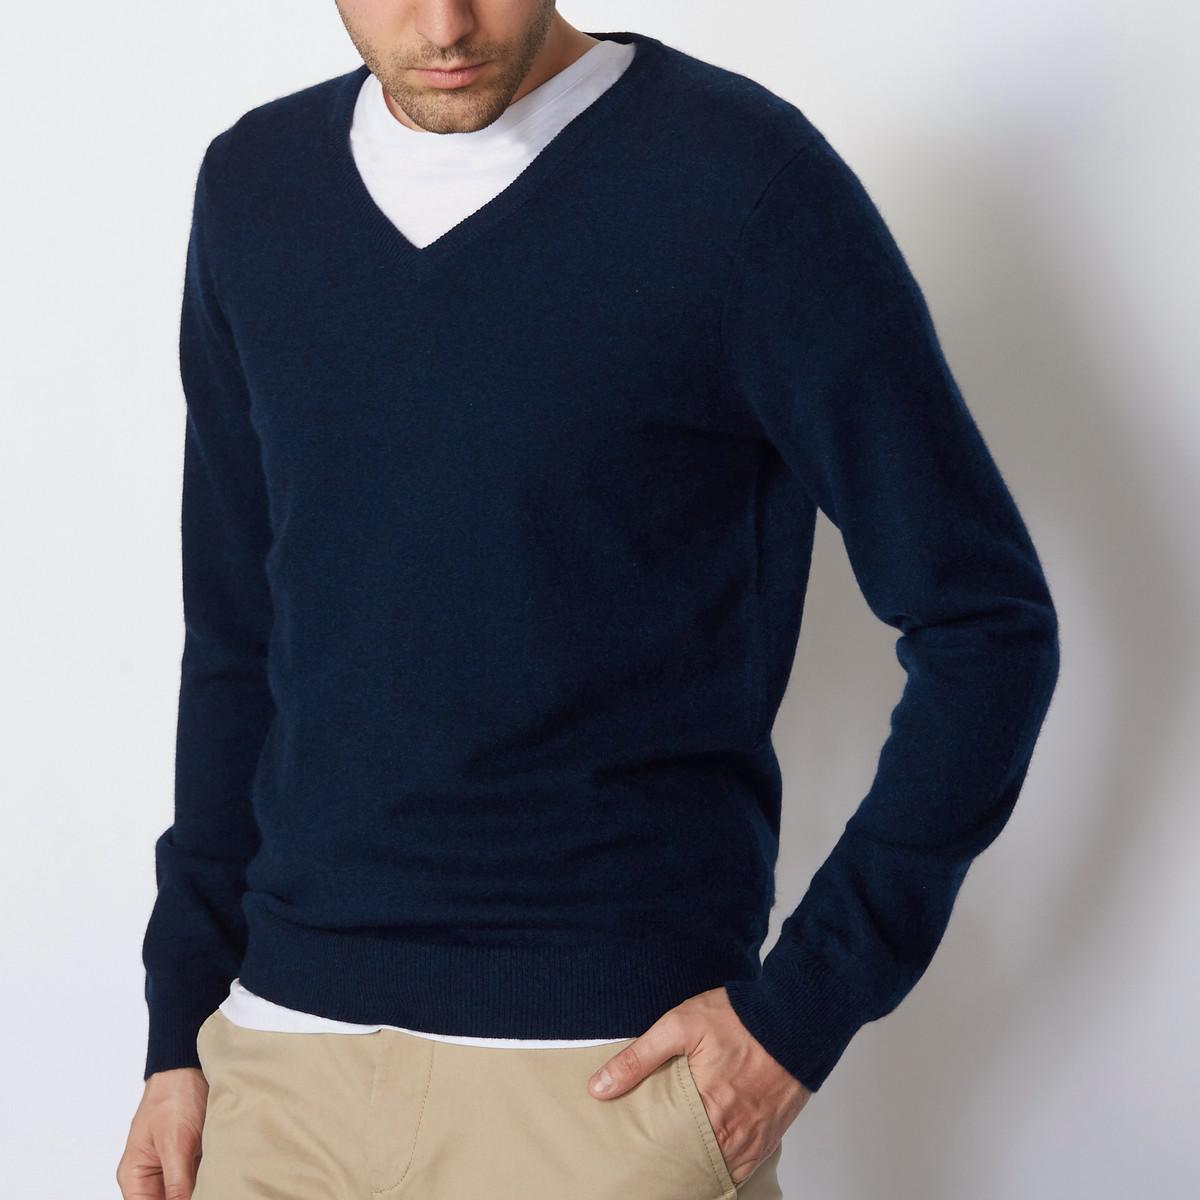 Lyst - La Redoute Cashmere Jumper/sweater in Blue for Men